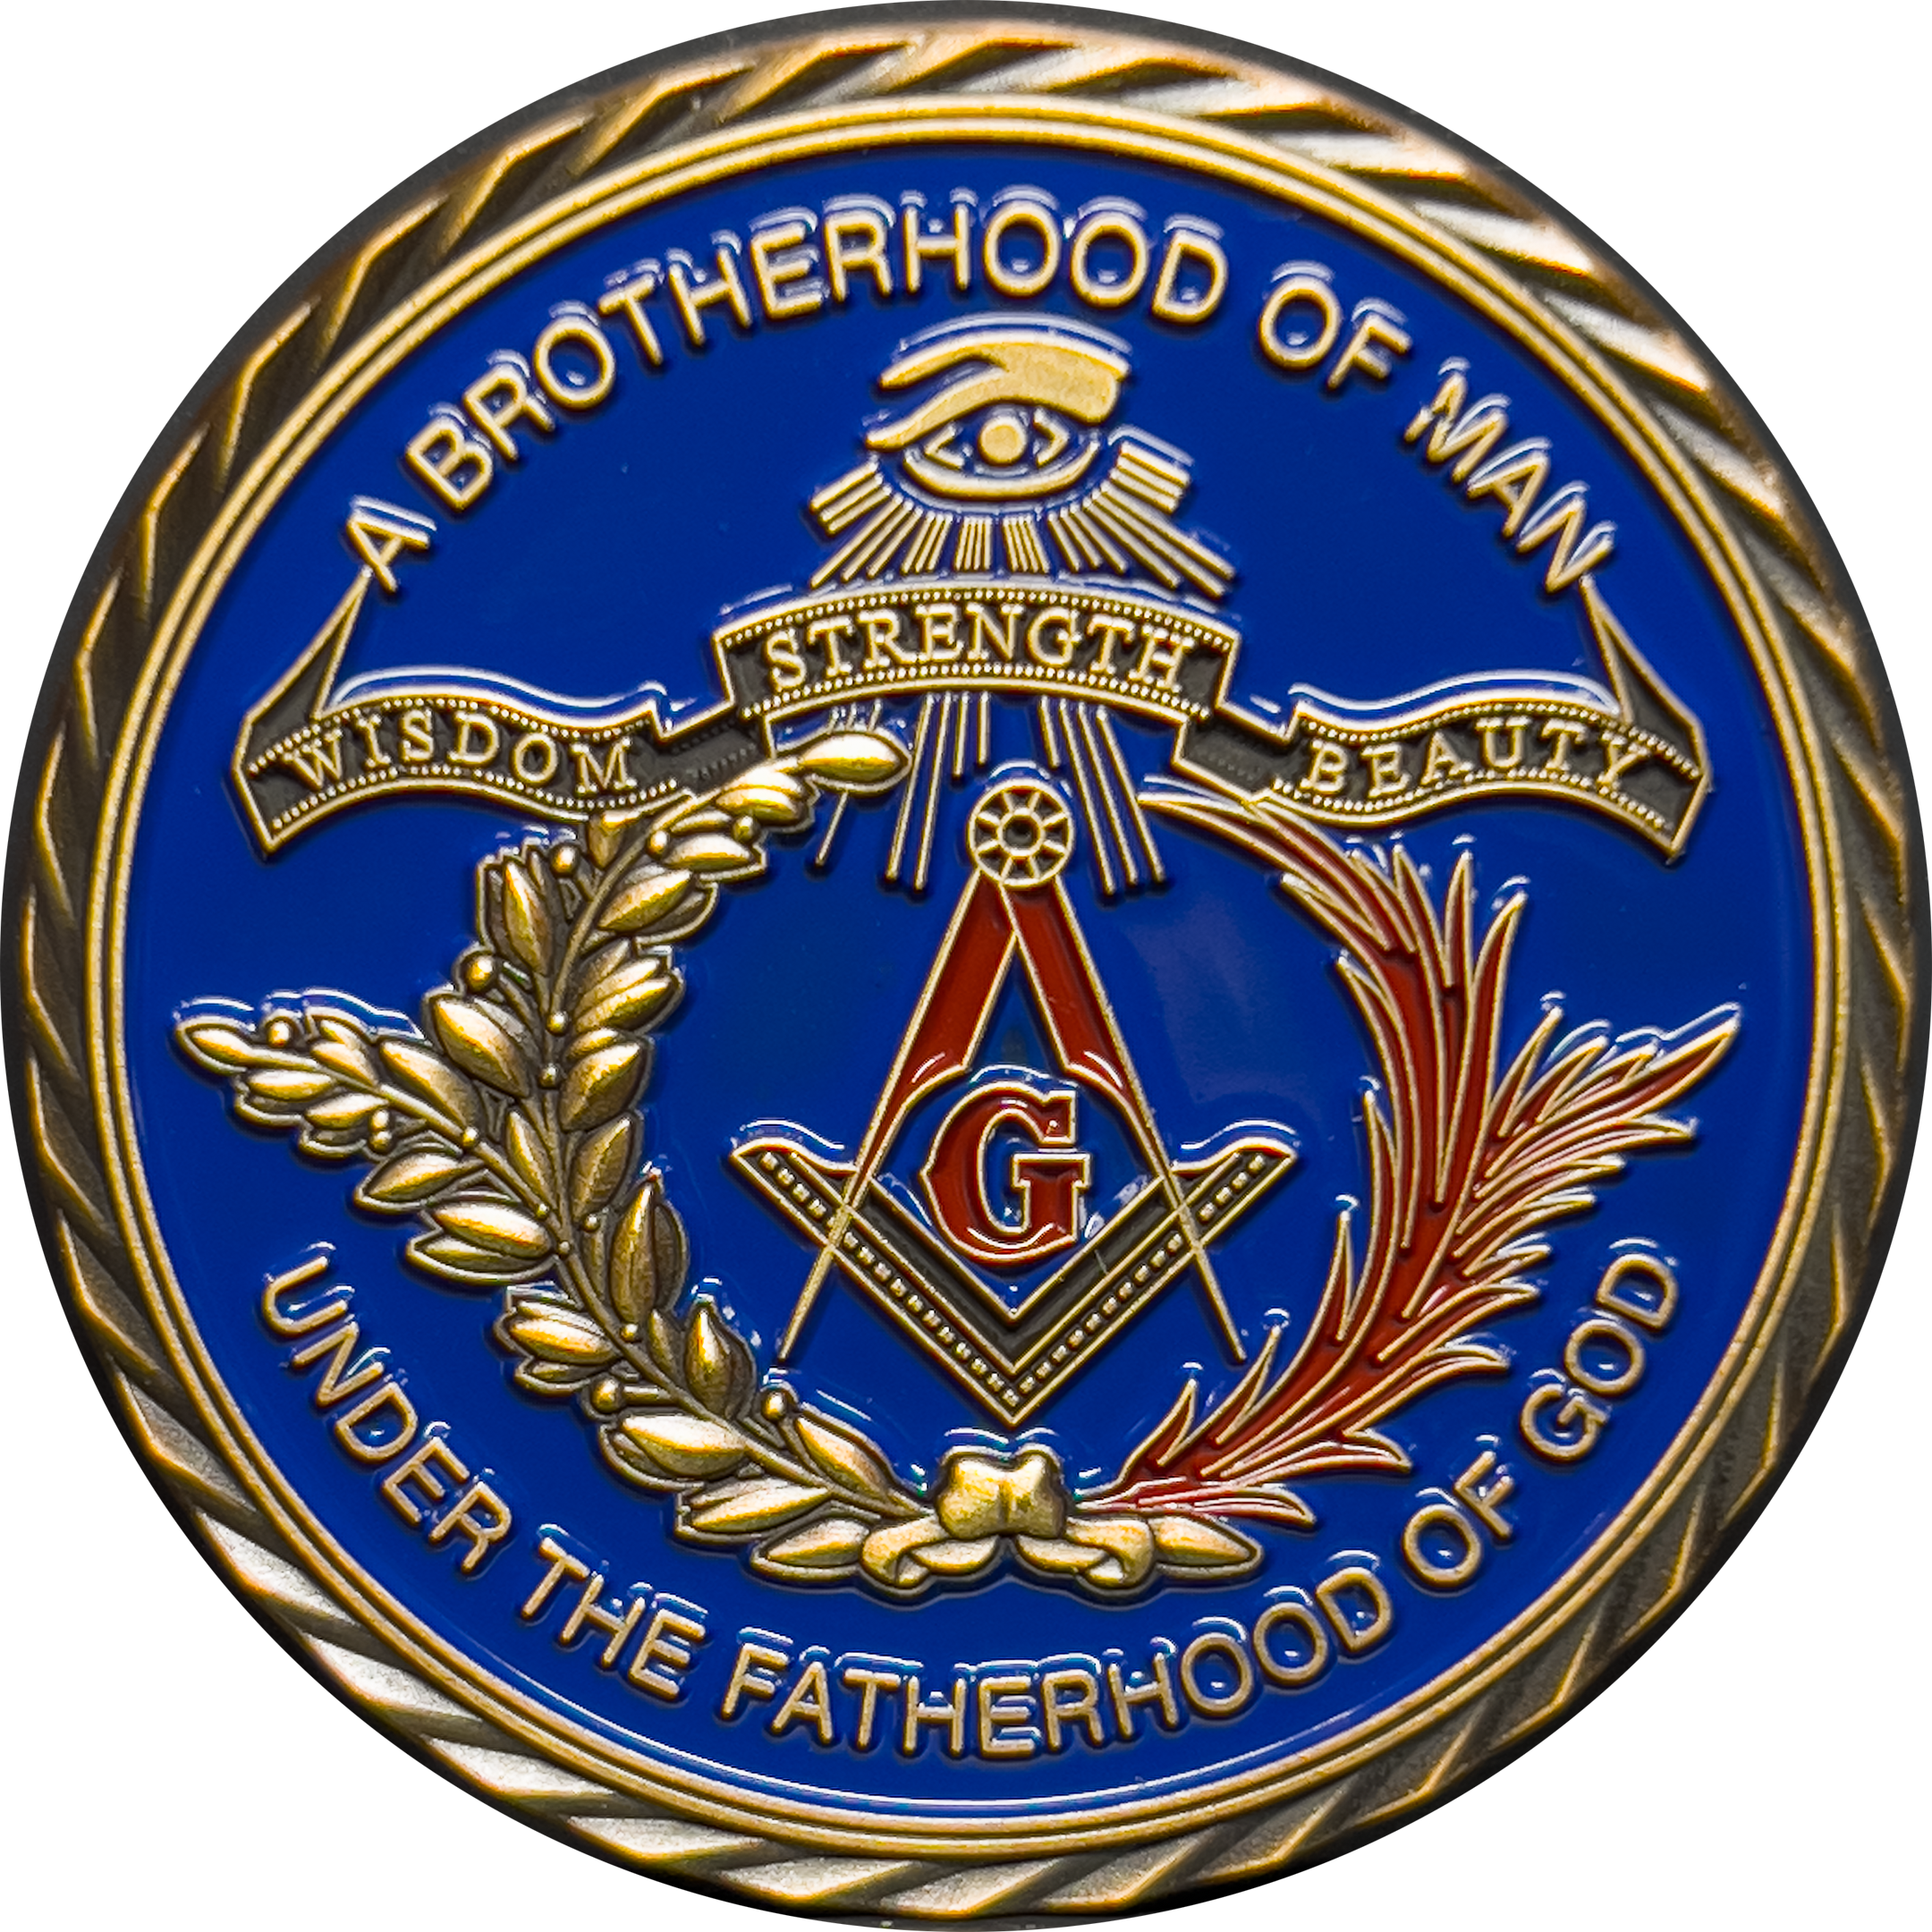 GL8-002 Masonic Illuminati FreeMason Lodge secret freemasonry challenge coin